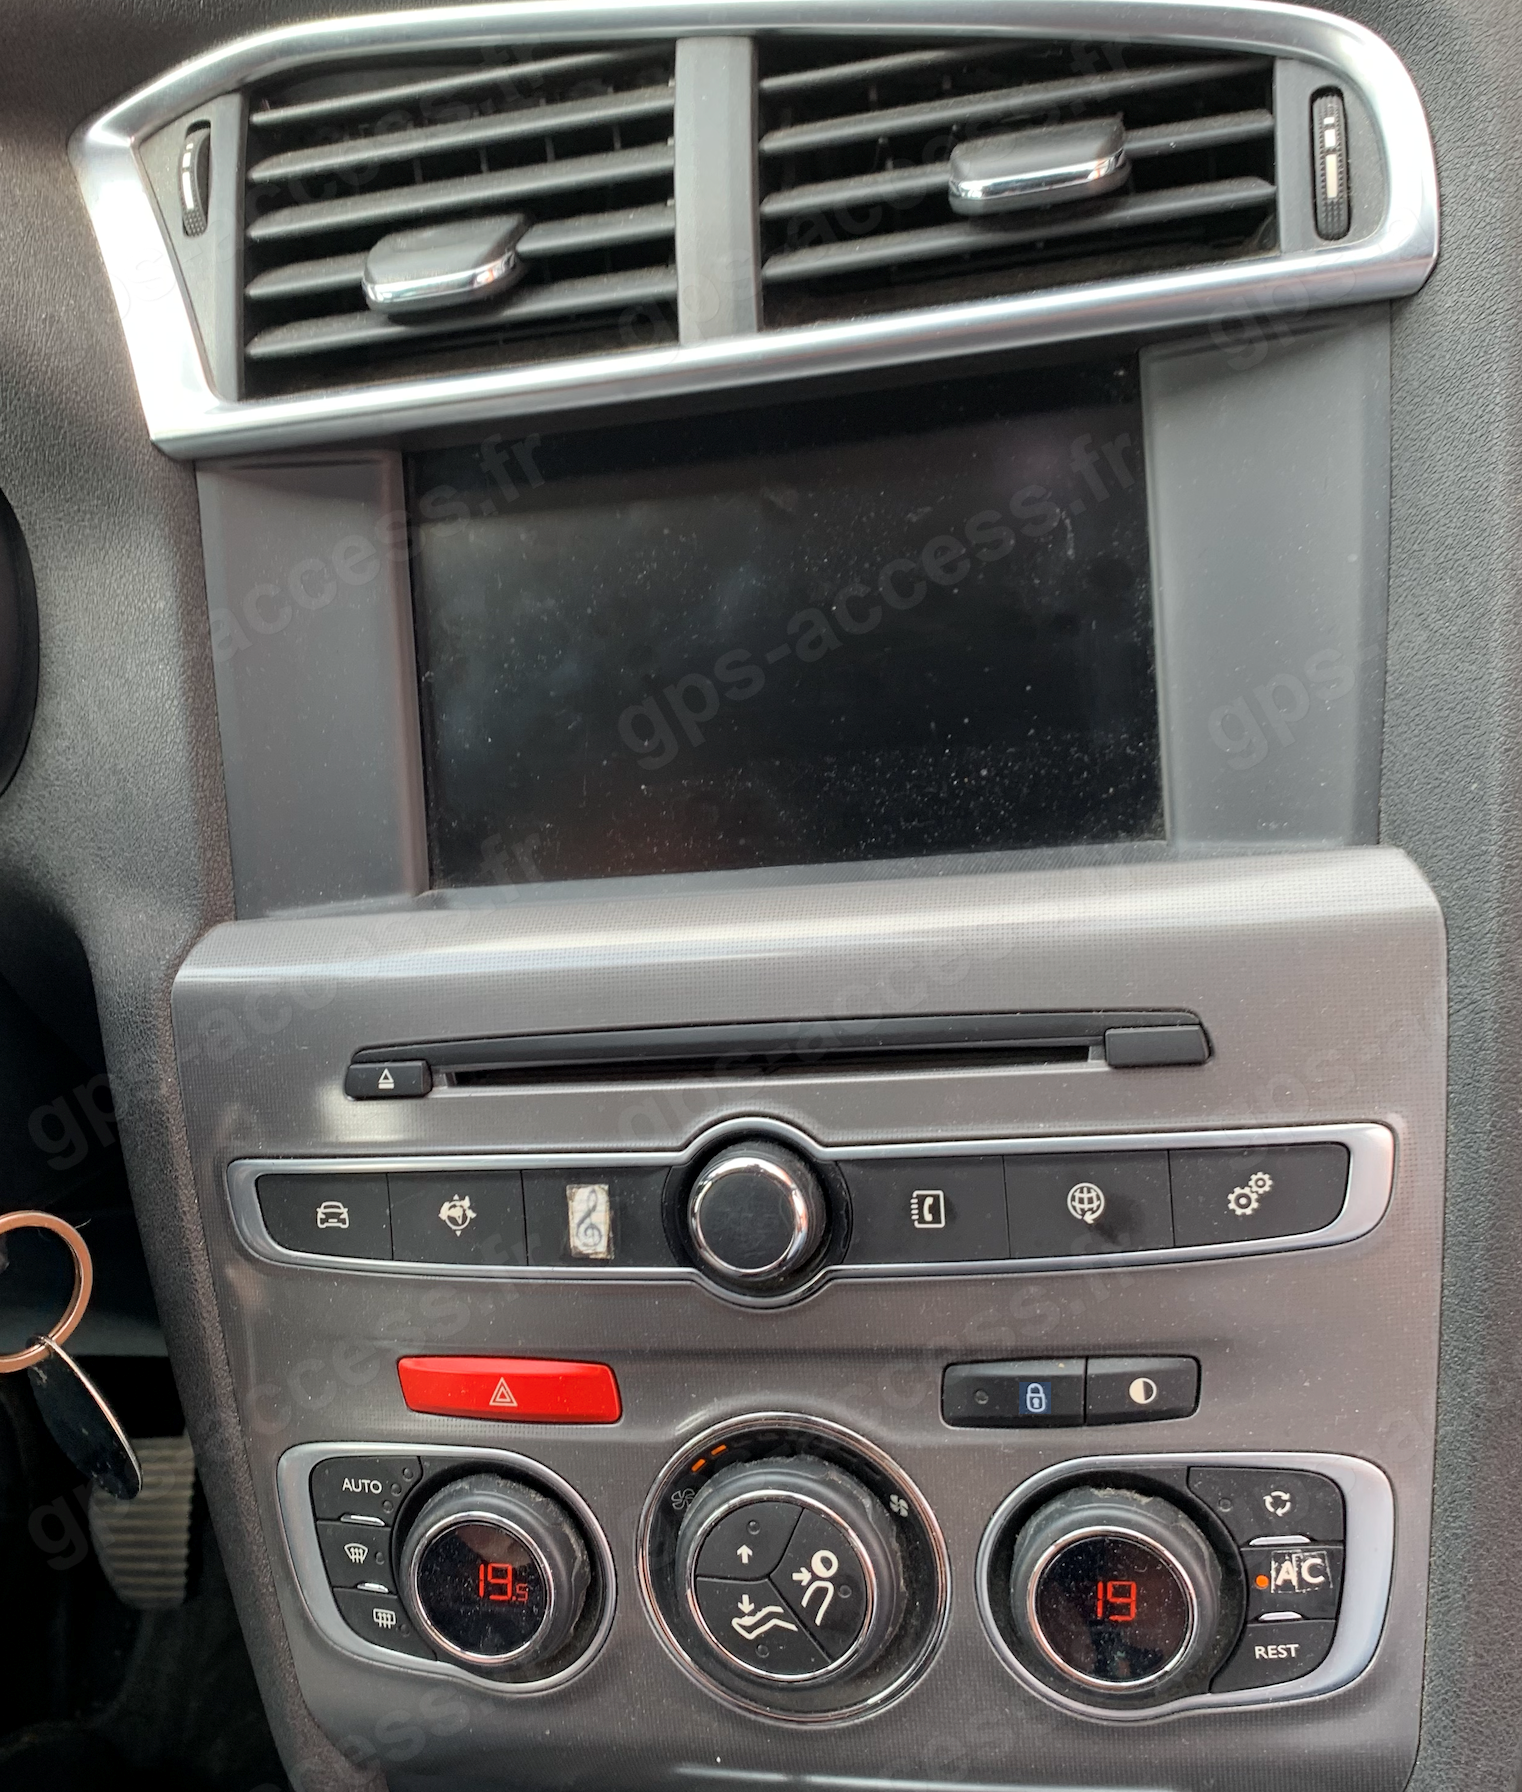 Autoradio tactile GPS Bluetooth Android & Apple Carplay Citroën C4 et DS4  de 2011 à 2018 + caméra de recul